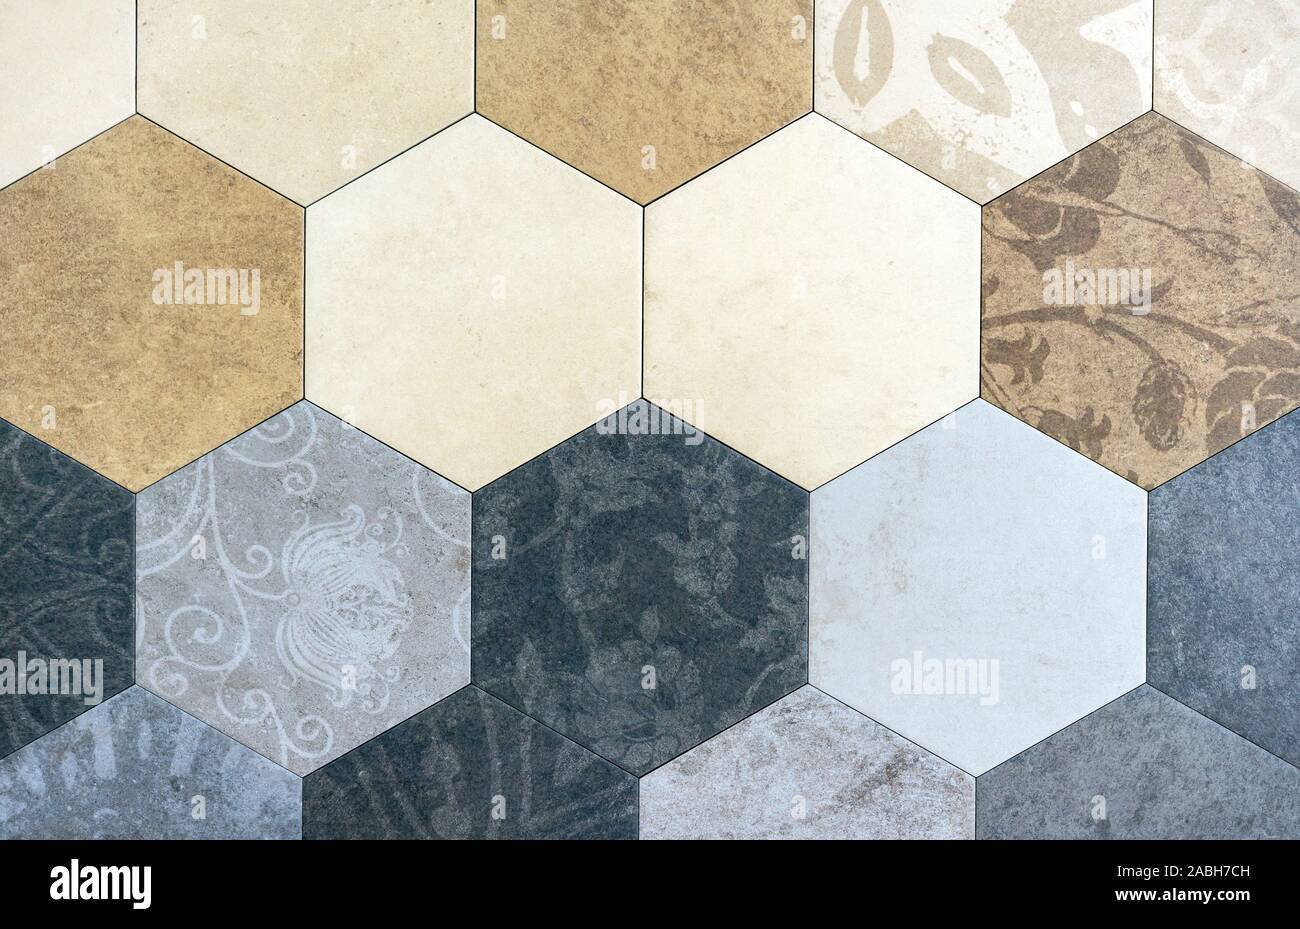 Color ceramic tiles in the form of honeycombs. Hexagonal floor tiles. Stock Photo